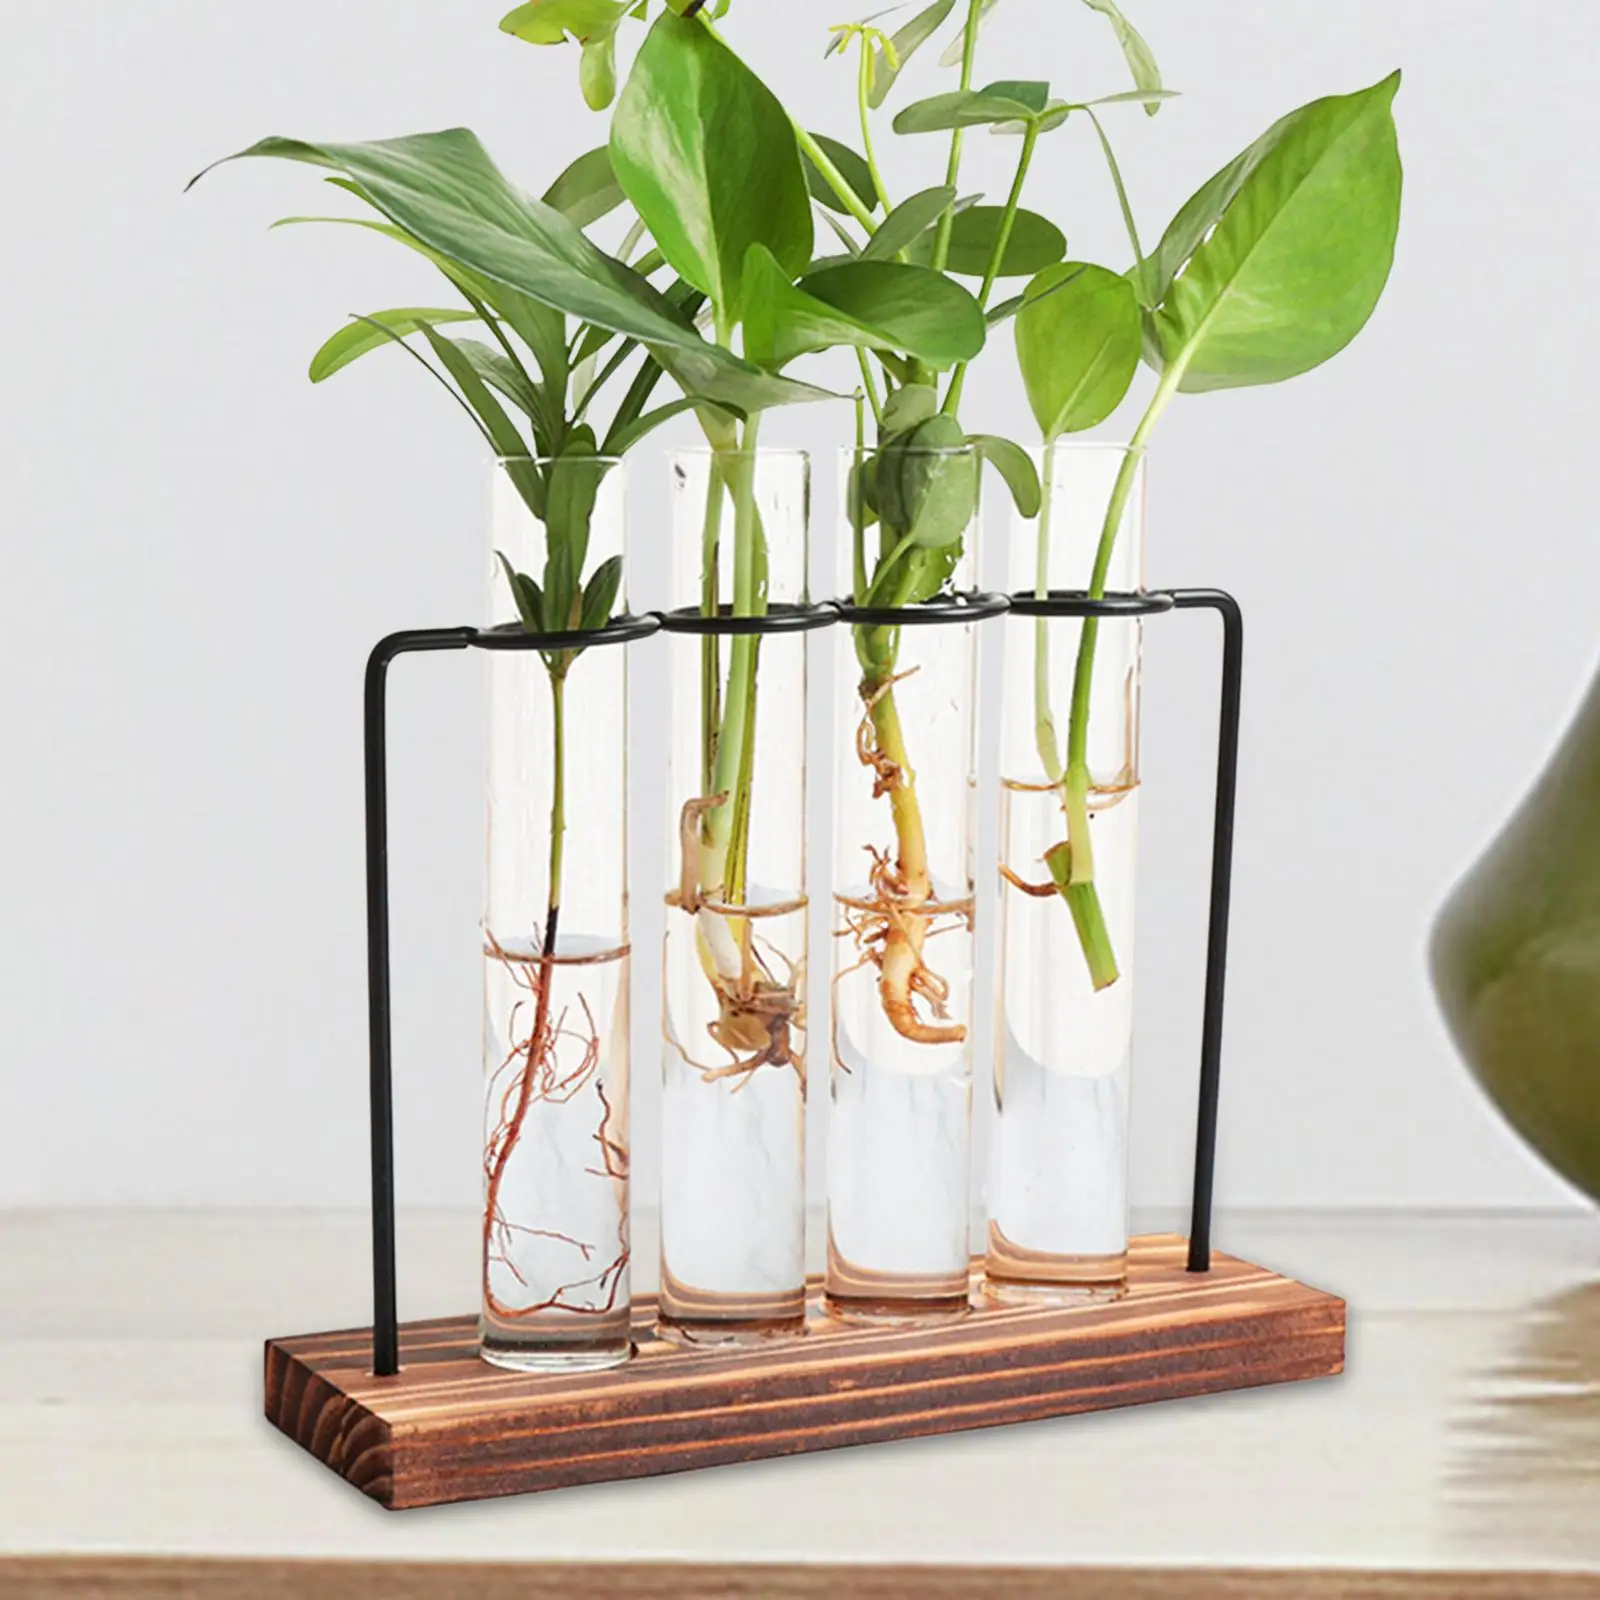 Test Tube Vase for Flowers with Stand Wooden Base Creative Decorative Flower Arrangement for Tabletop Indoor Bedroom Shelf Gifts